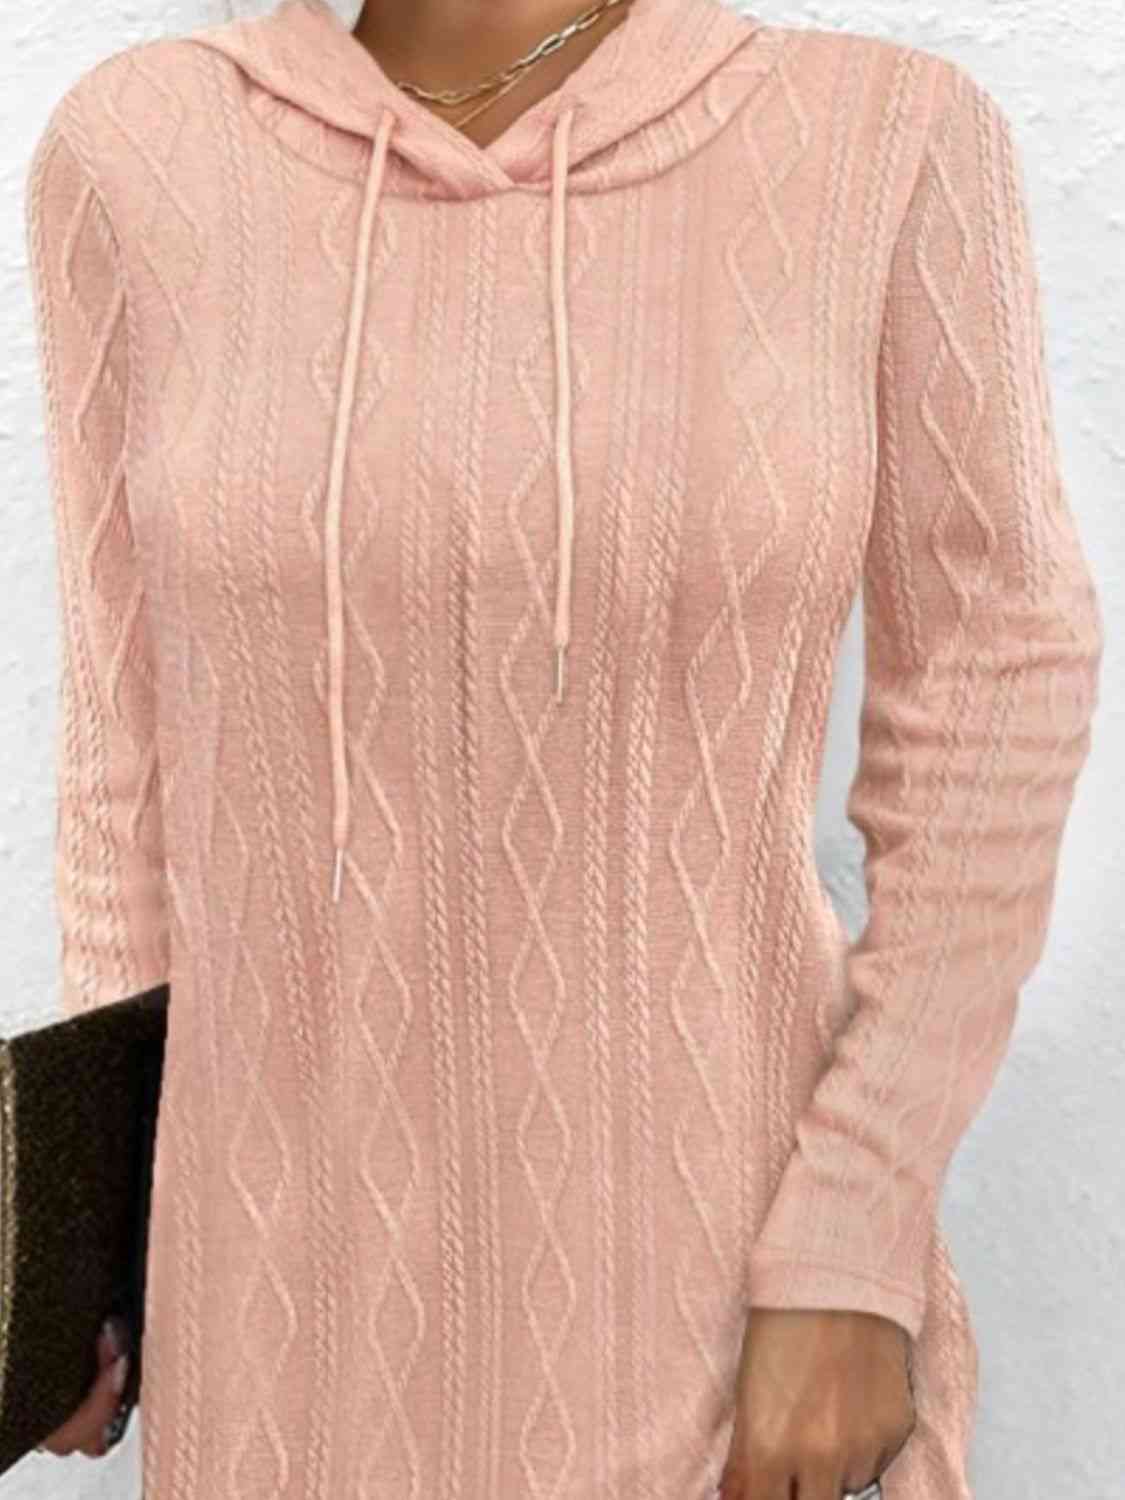 CozyWonders Full Size Drawstring Hooded Sweater Dress